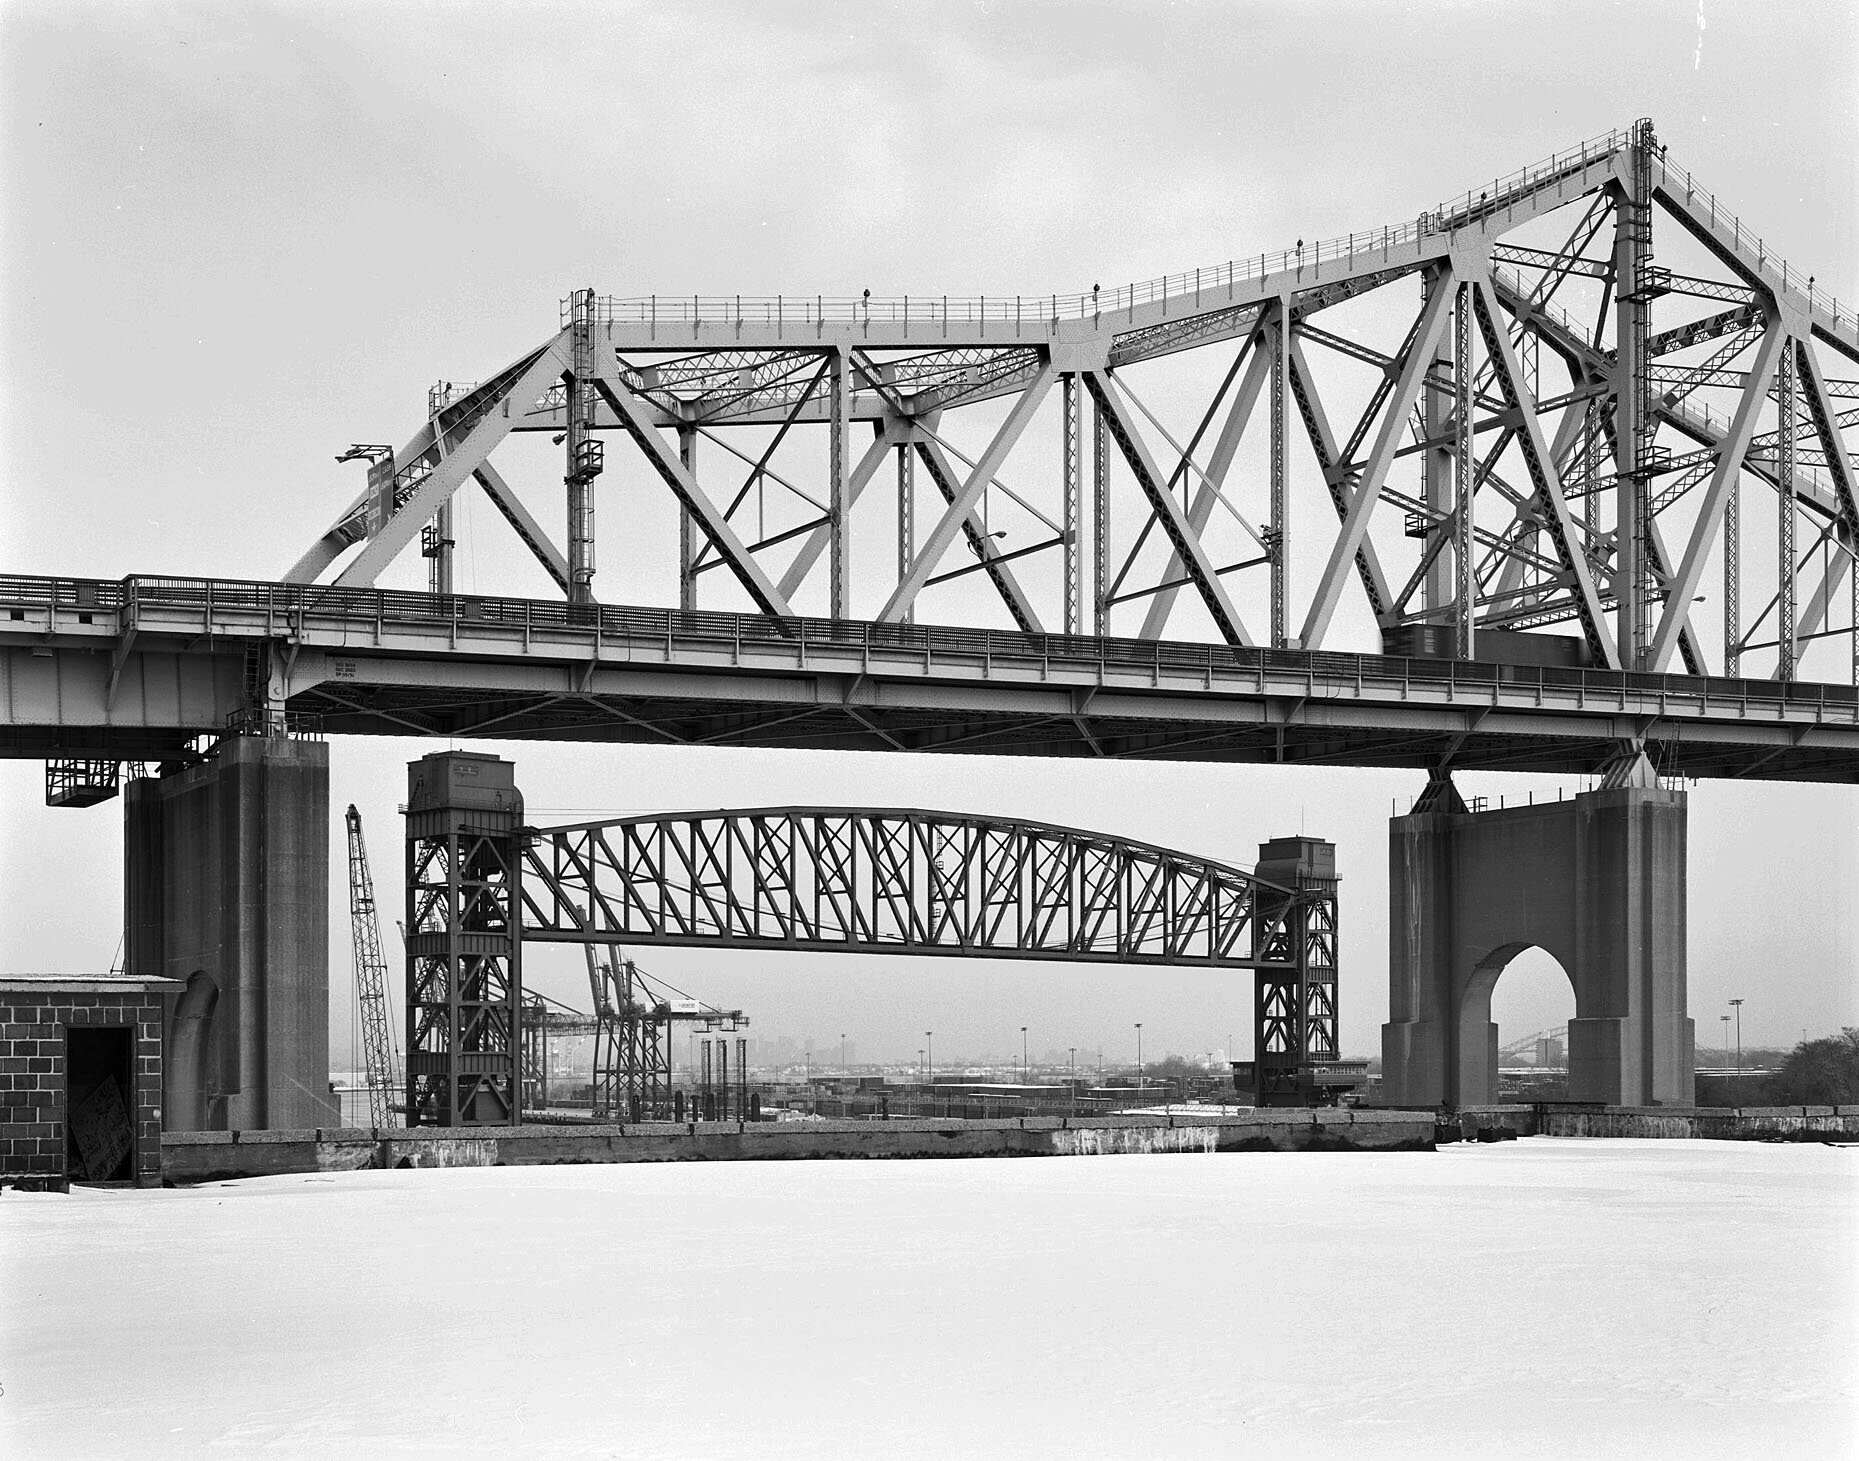 Goethals Bridge, Elizabeth, NJ